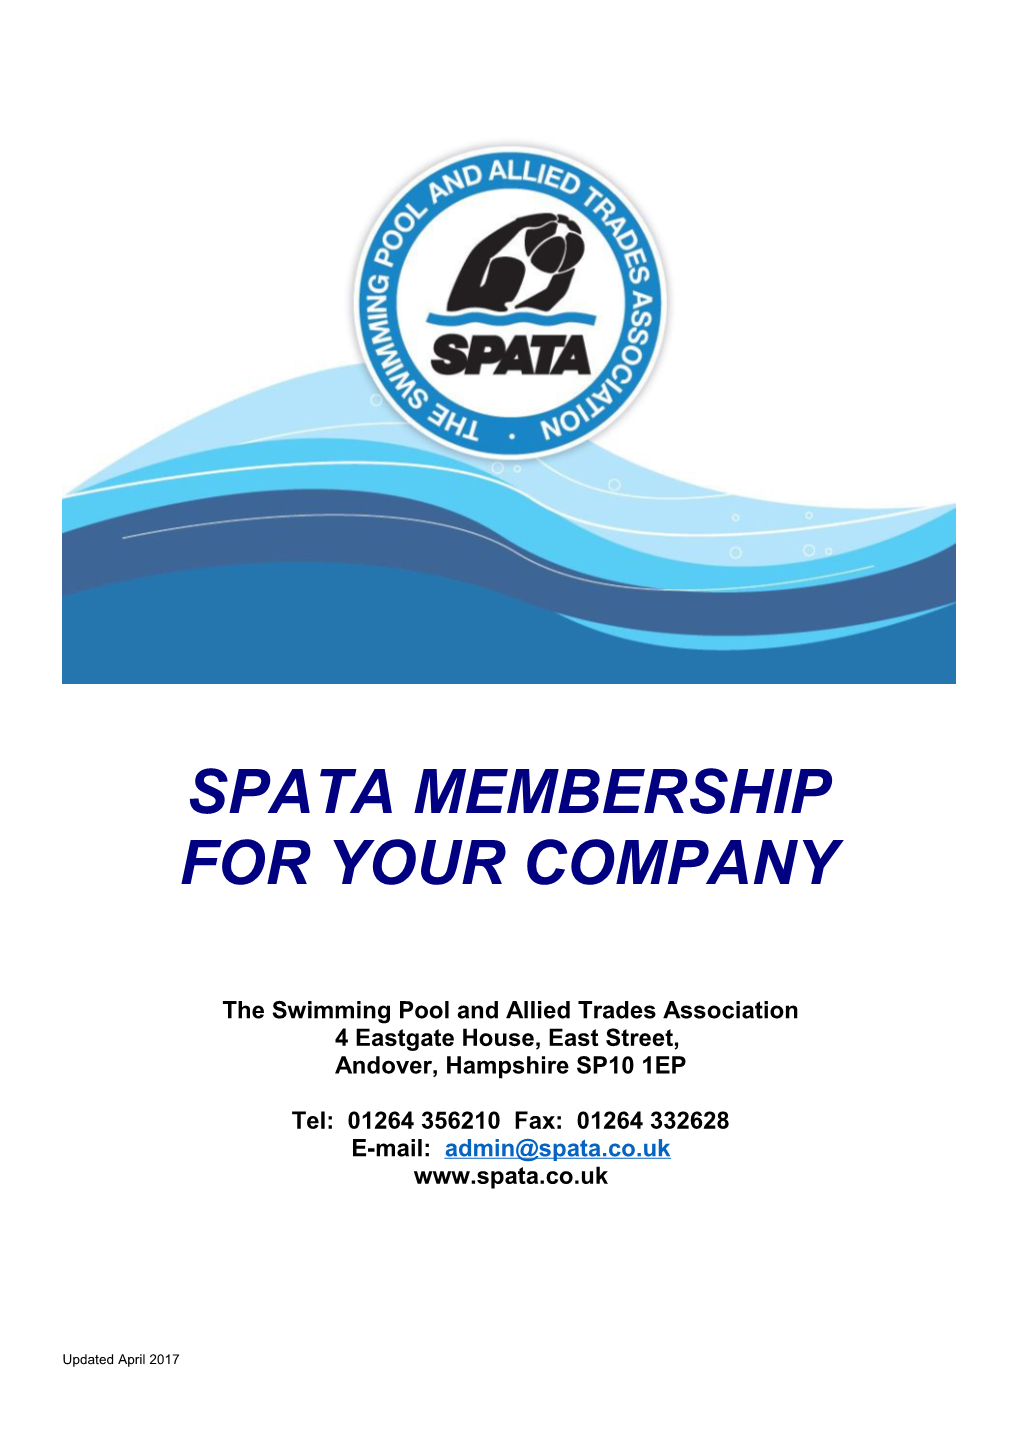 Application for Spata Membership